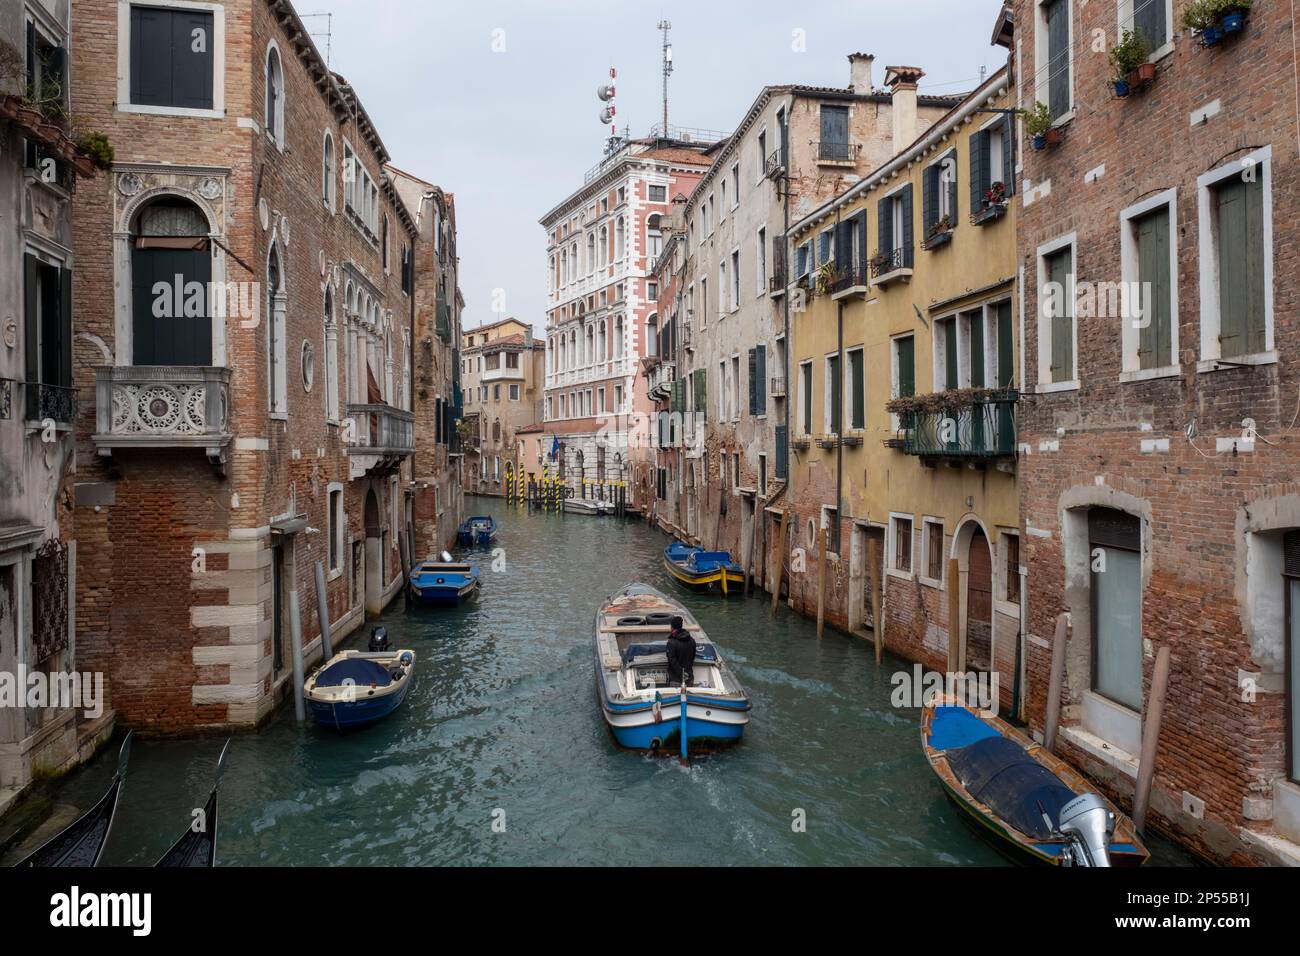 Narrow side canal, San Polo district, Venice, Italy Stock Photo